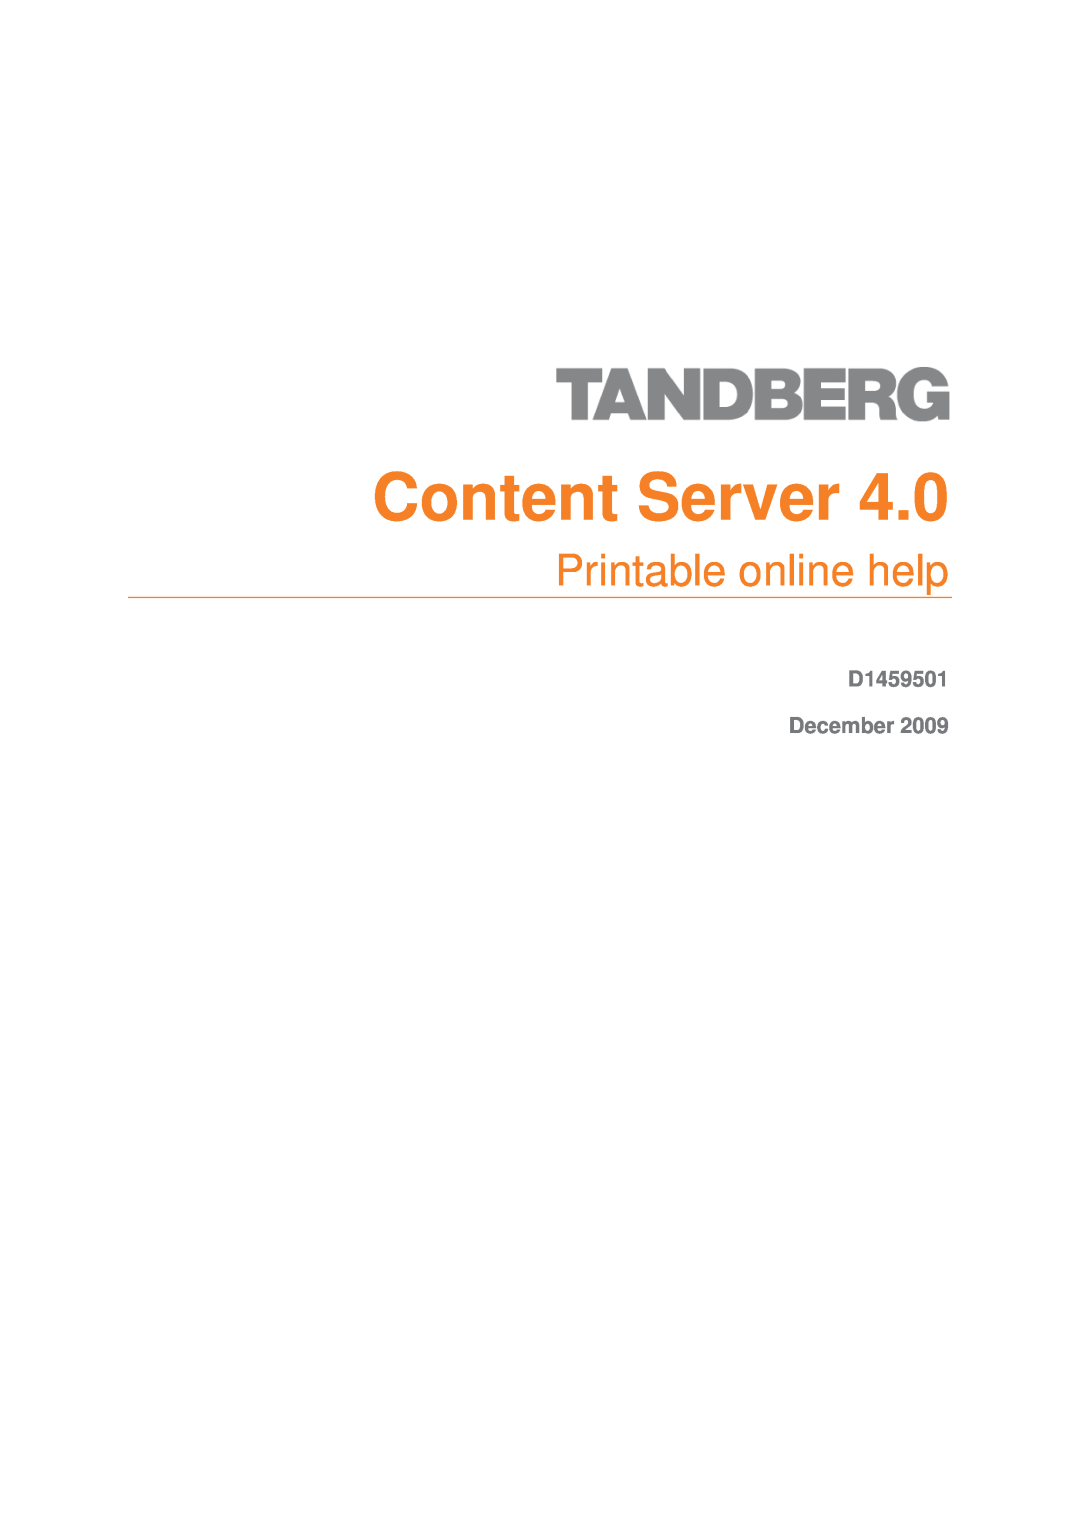 TANDBERG manual Content Server, Printable online help, D1459501 December 